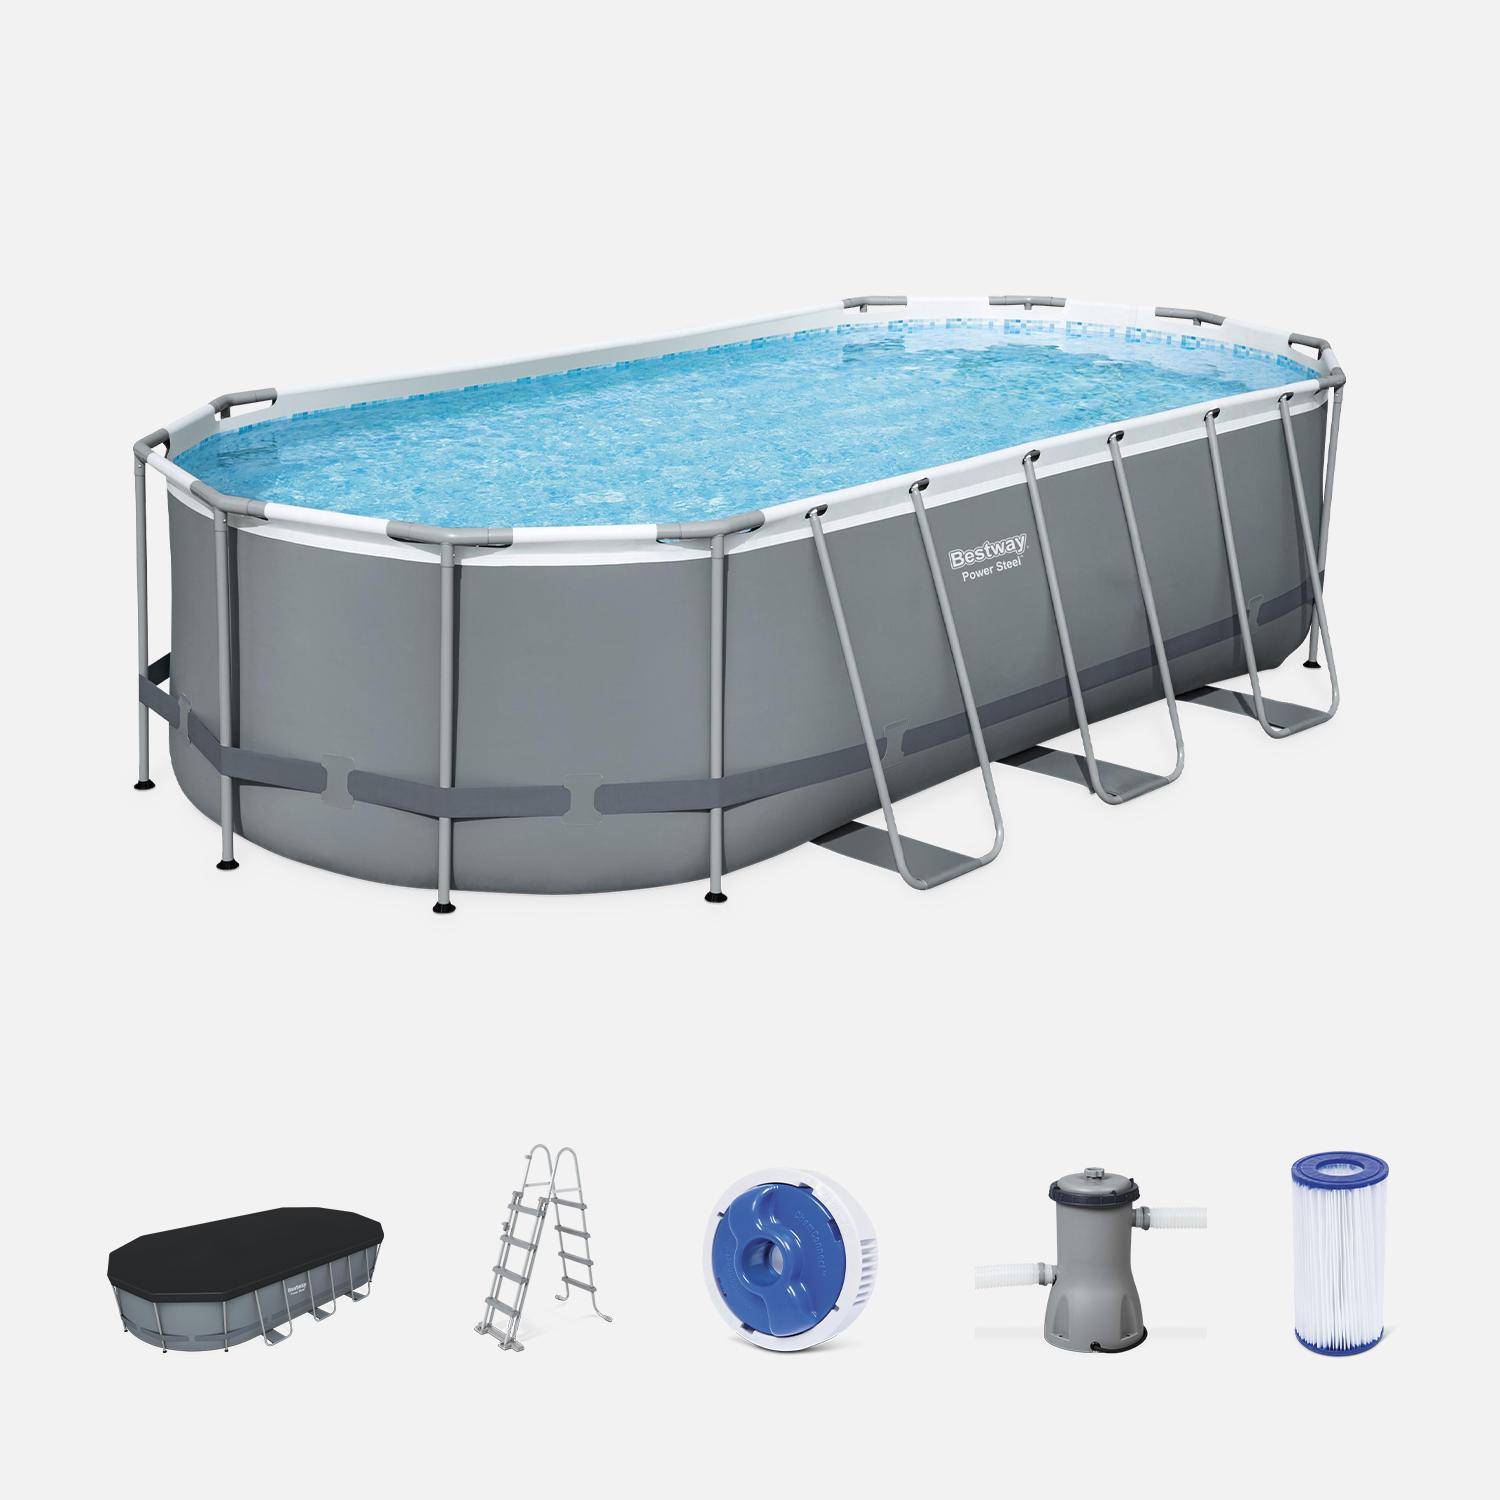 Kit de piscina desmontable BESTWAY - Spinelle gris - piscina tubular ovalada de 5x3 m, bomba de filtración, escalera, lona, difusor químico ChemConnect, estructura de acero para piscinas sobre suelo Photo1